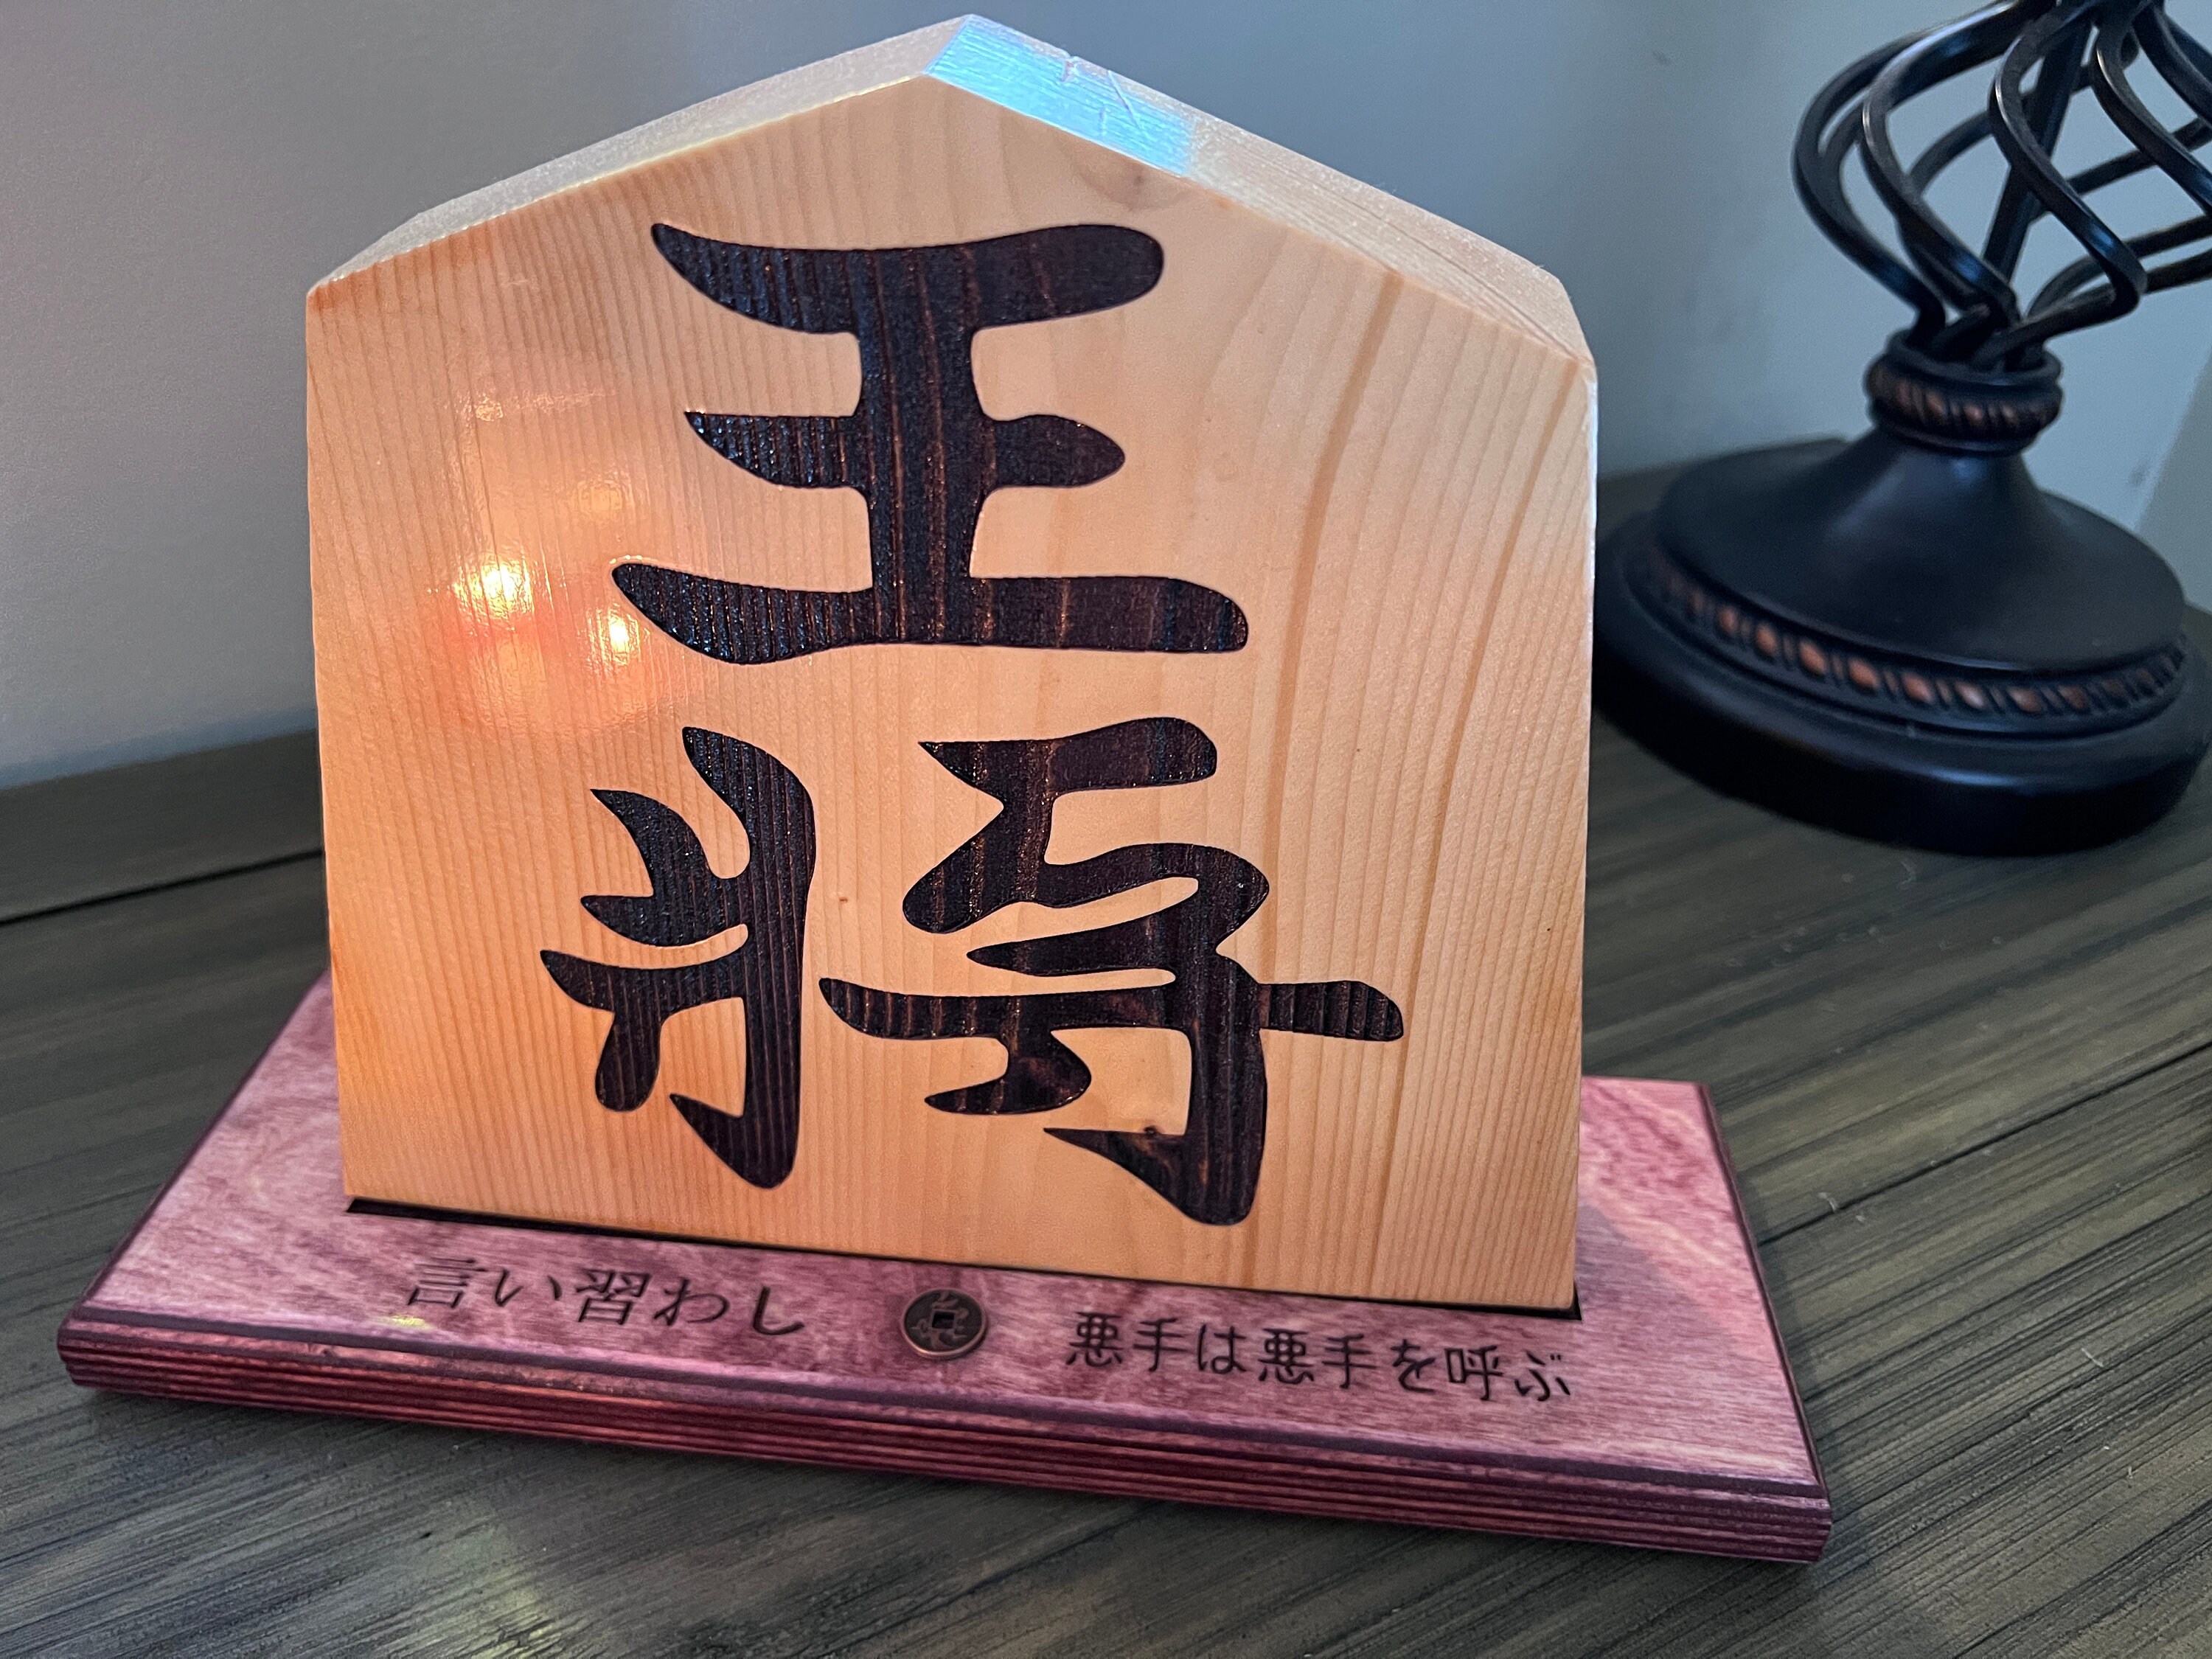 Wooden Phone Stand, Shogi Fan Gift Idea, Handmade Japanese Chess